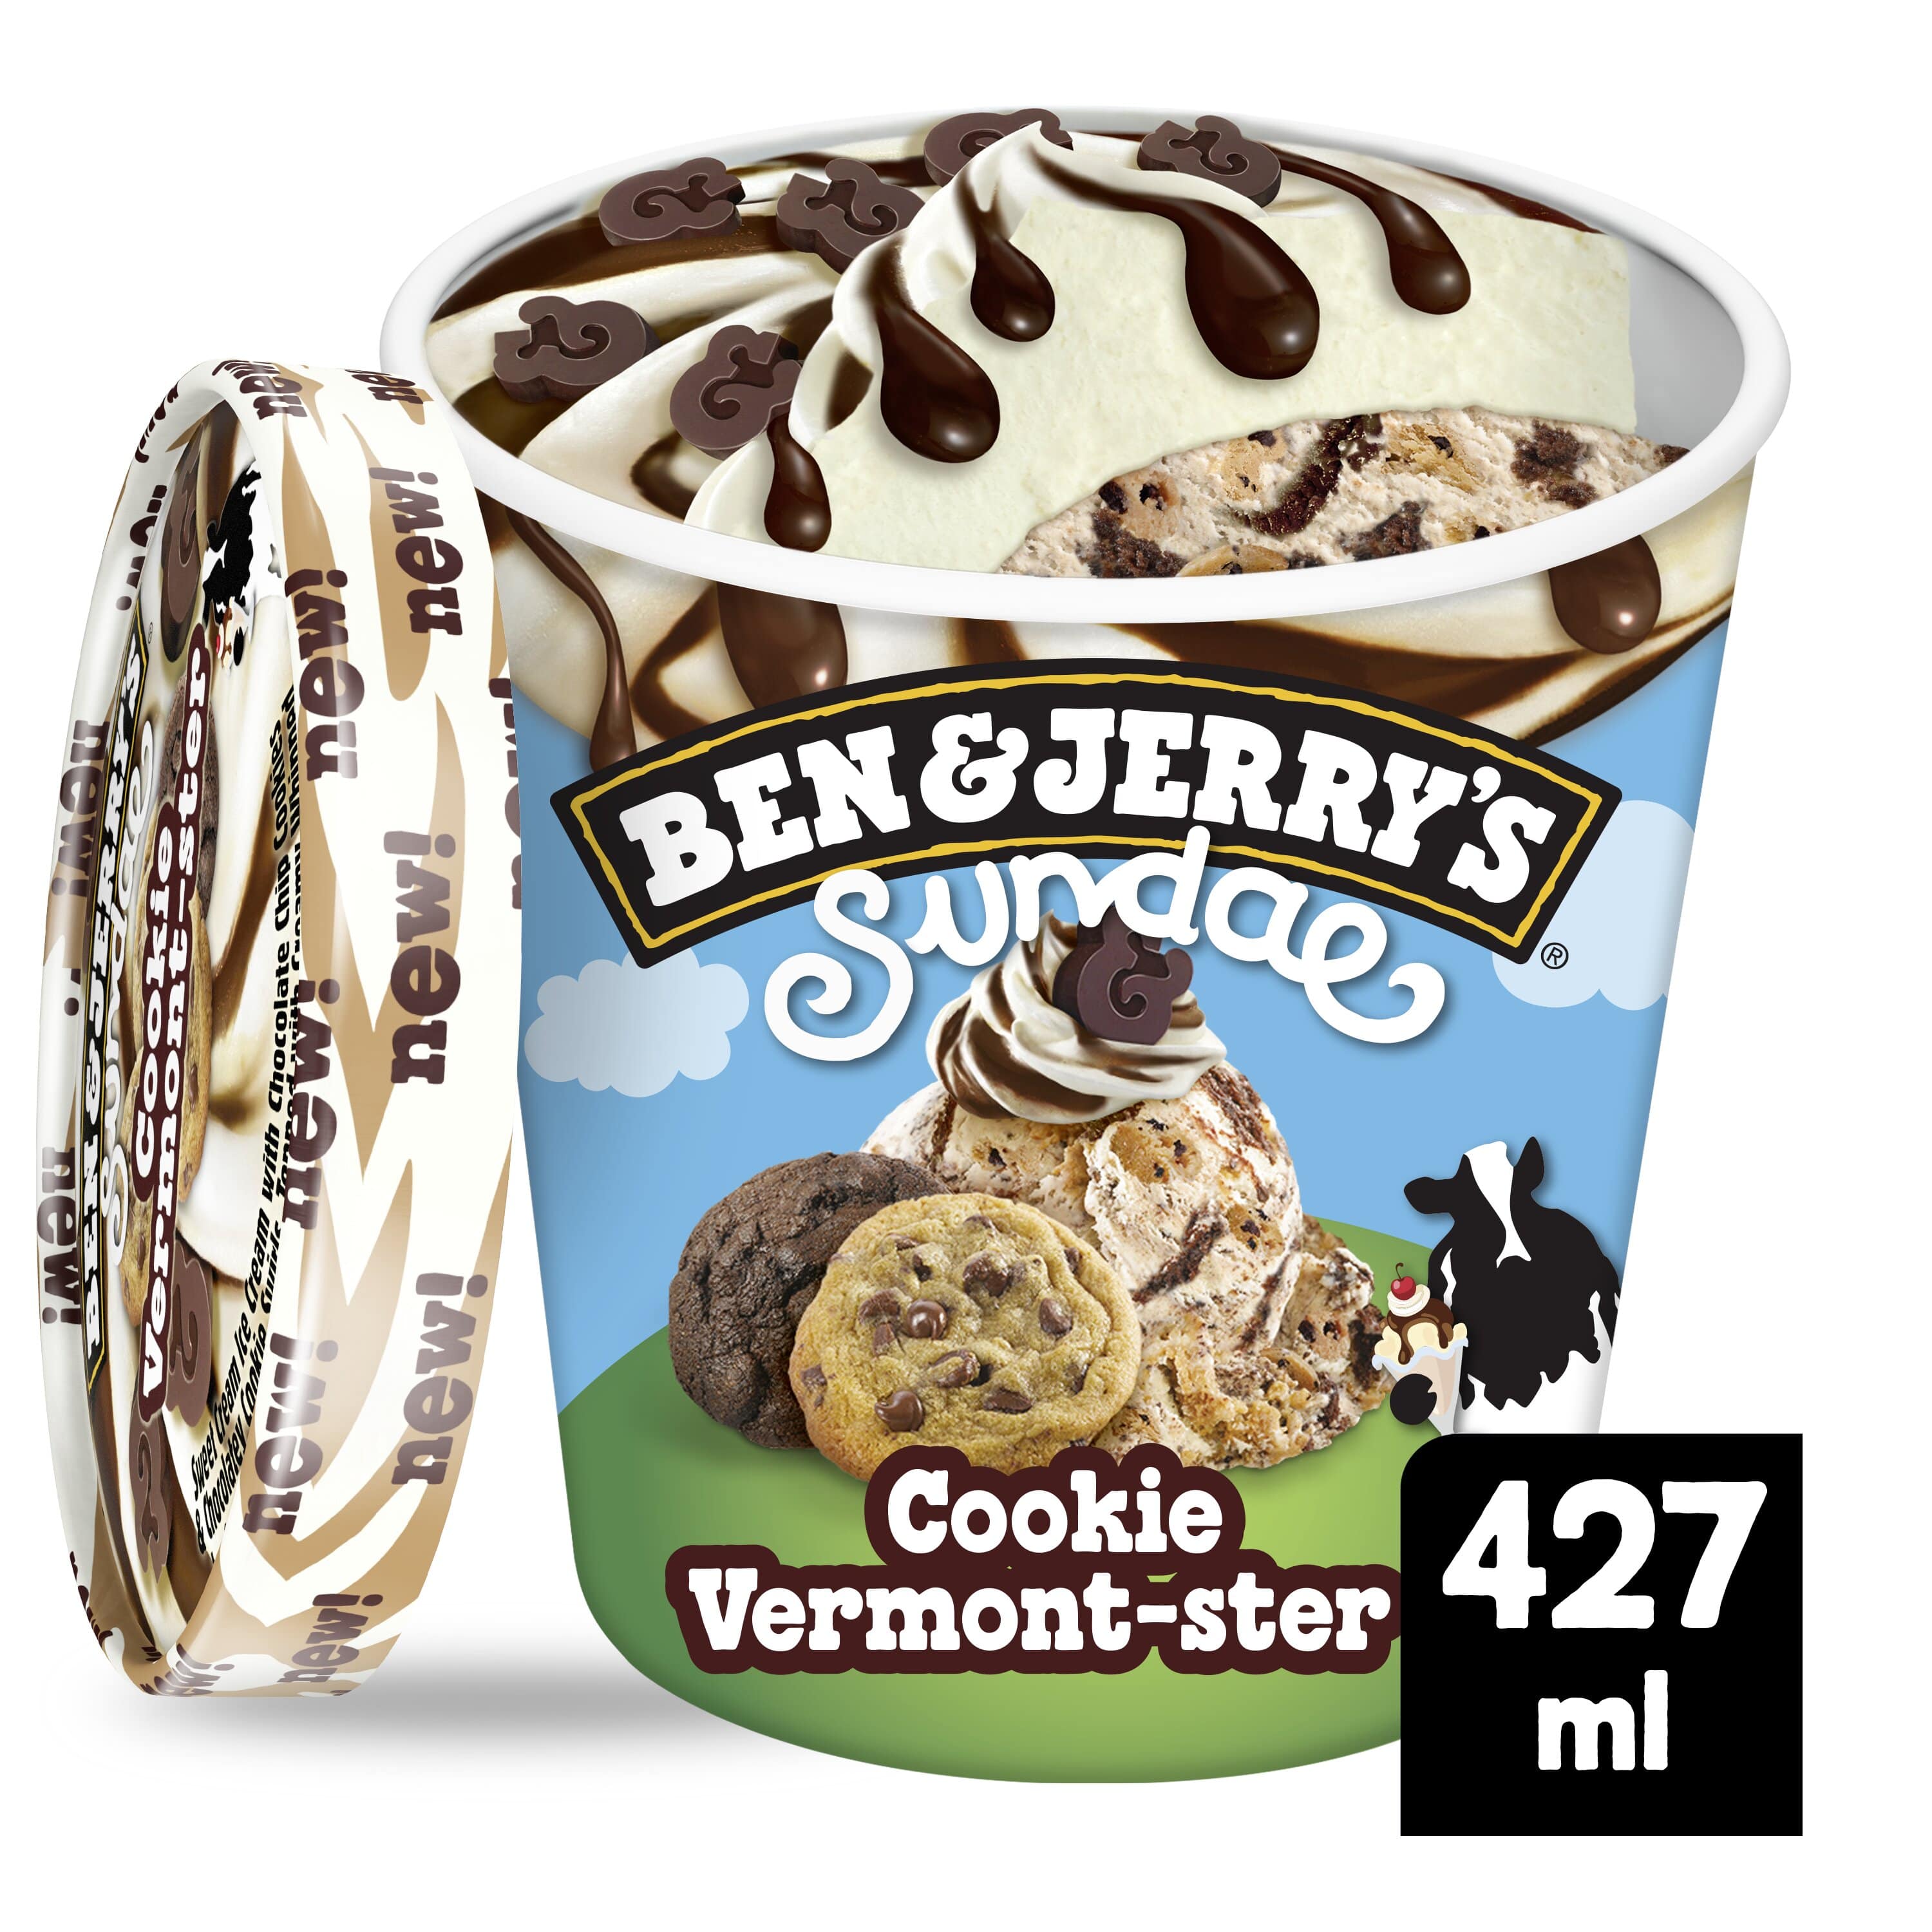 Ben & Jerry's Sundae  Cookie Vermont-ster 427ml - 